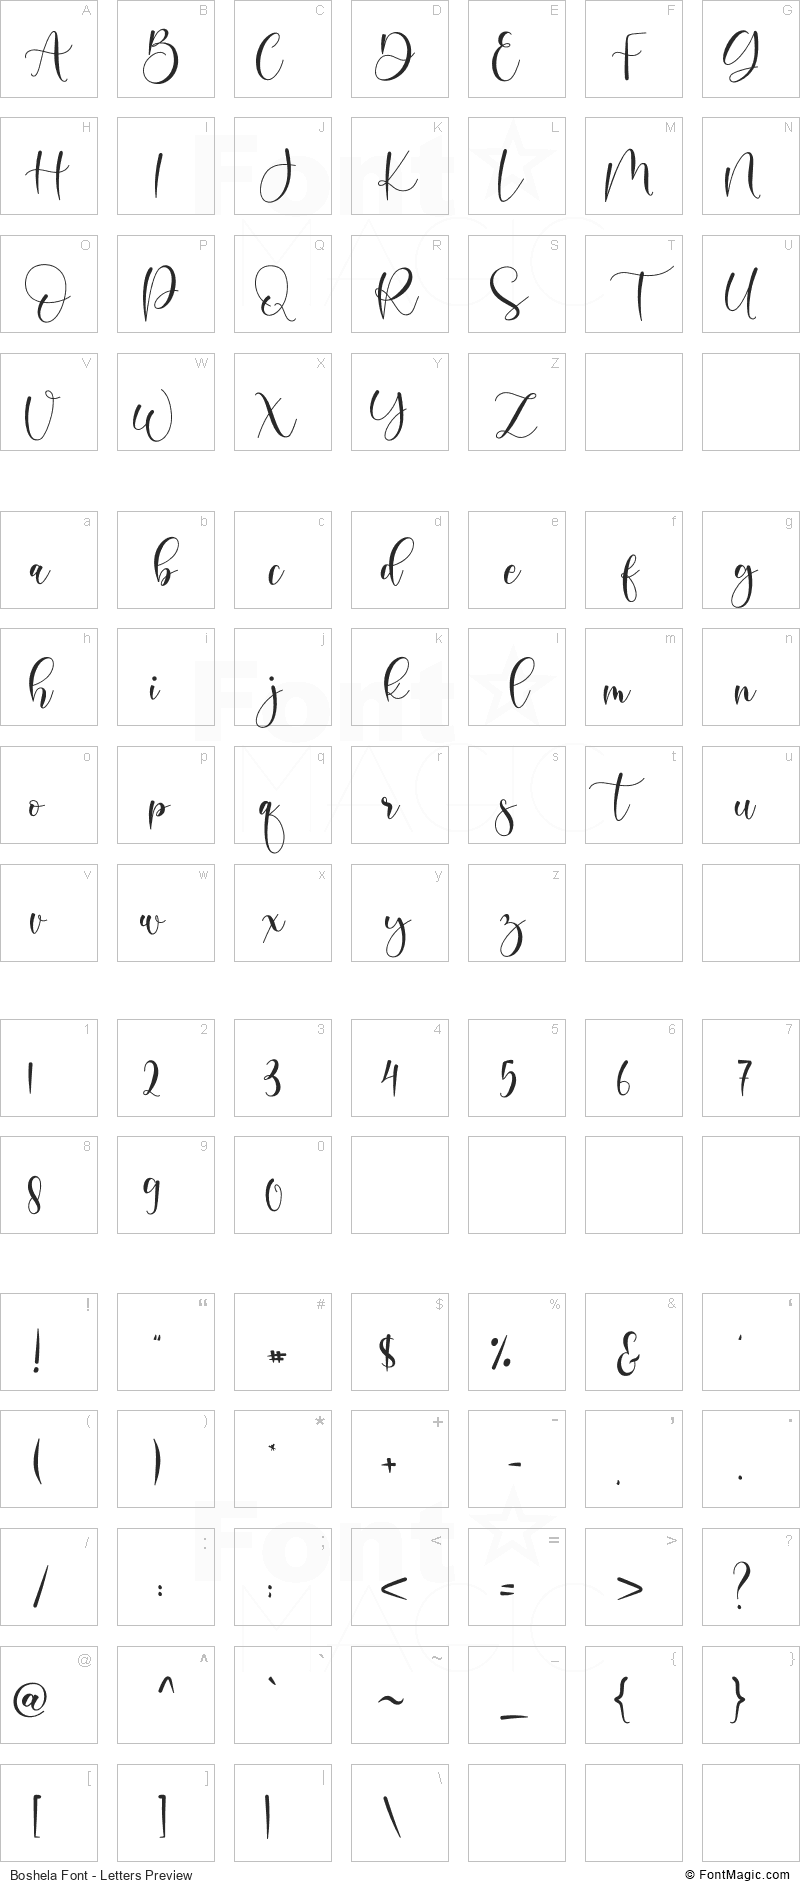 Boshela Font - All Latters Preview Chart